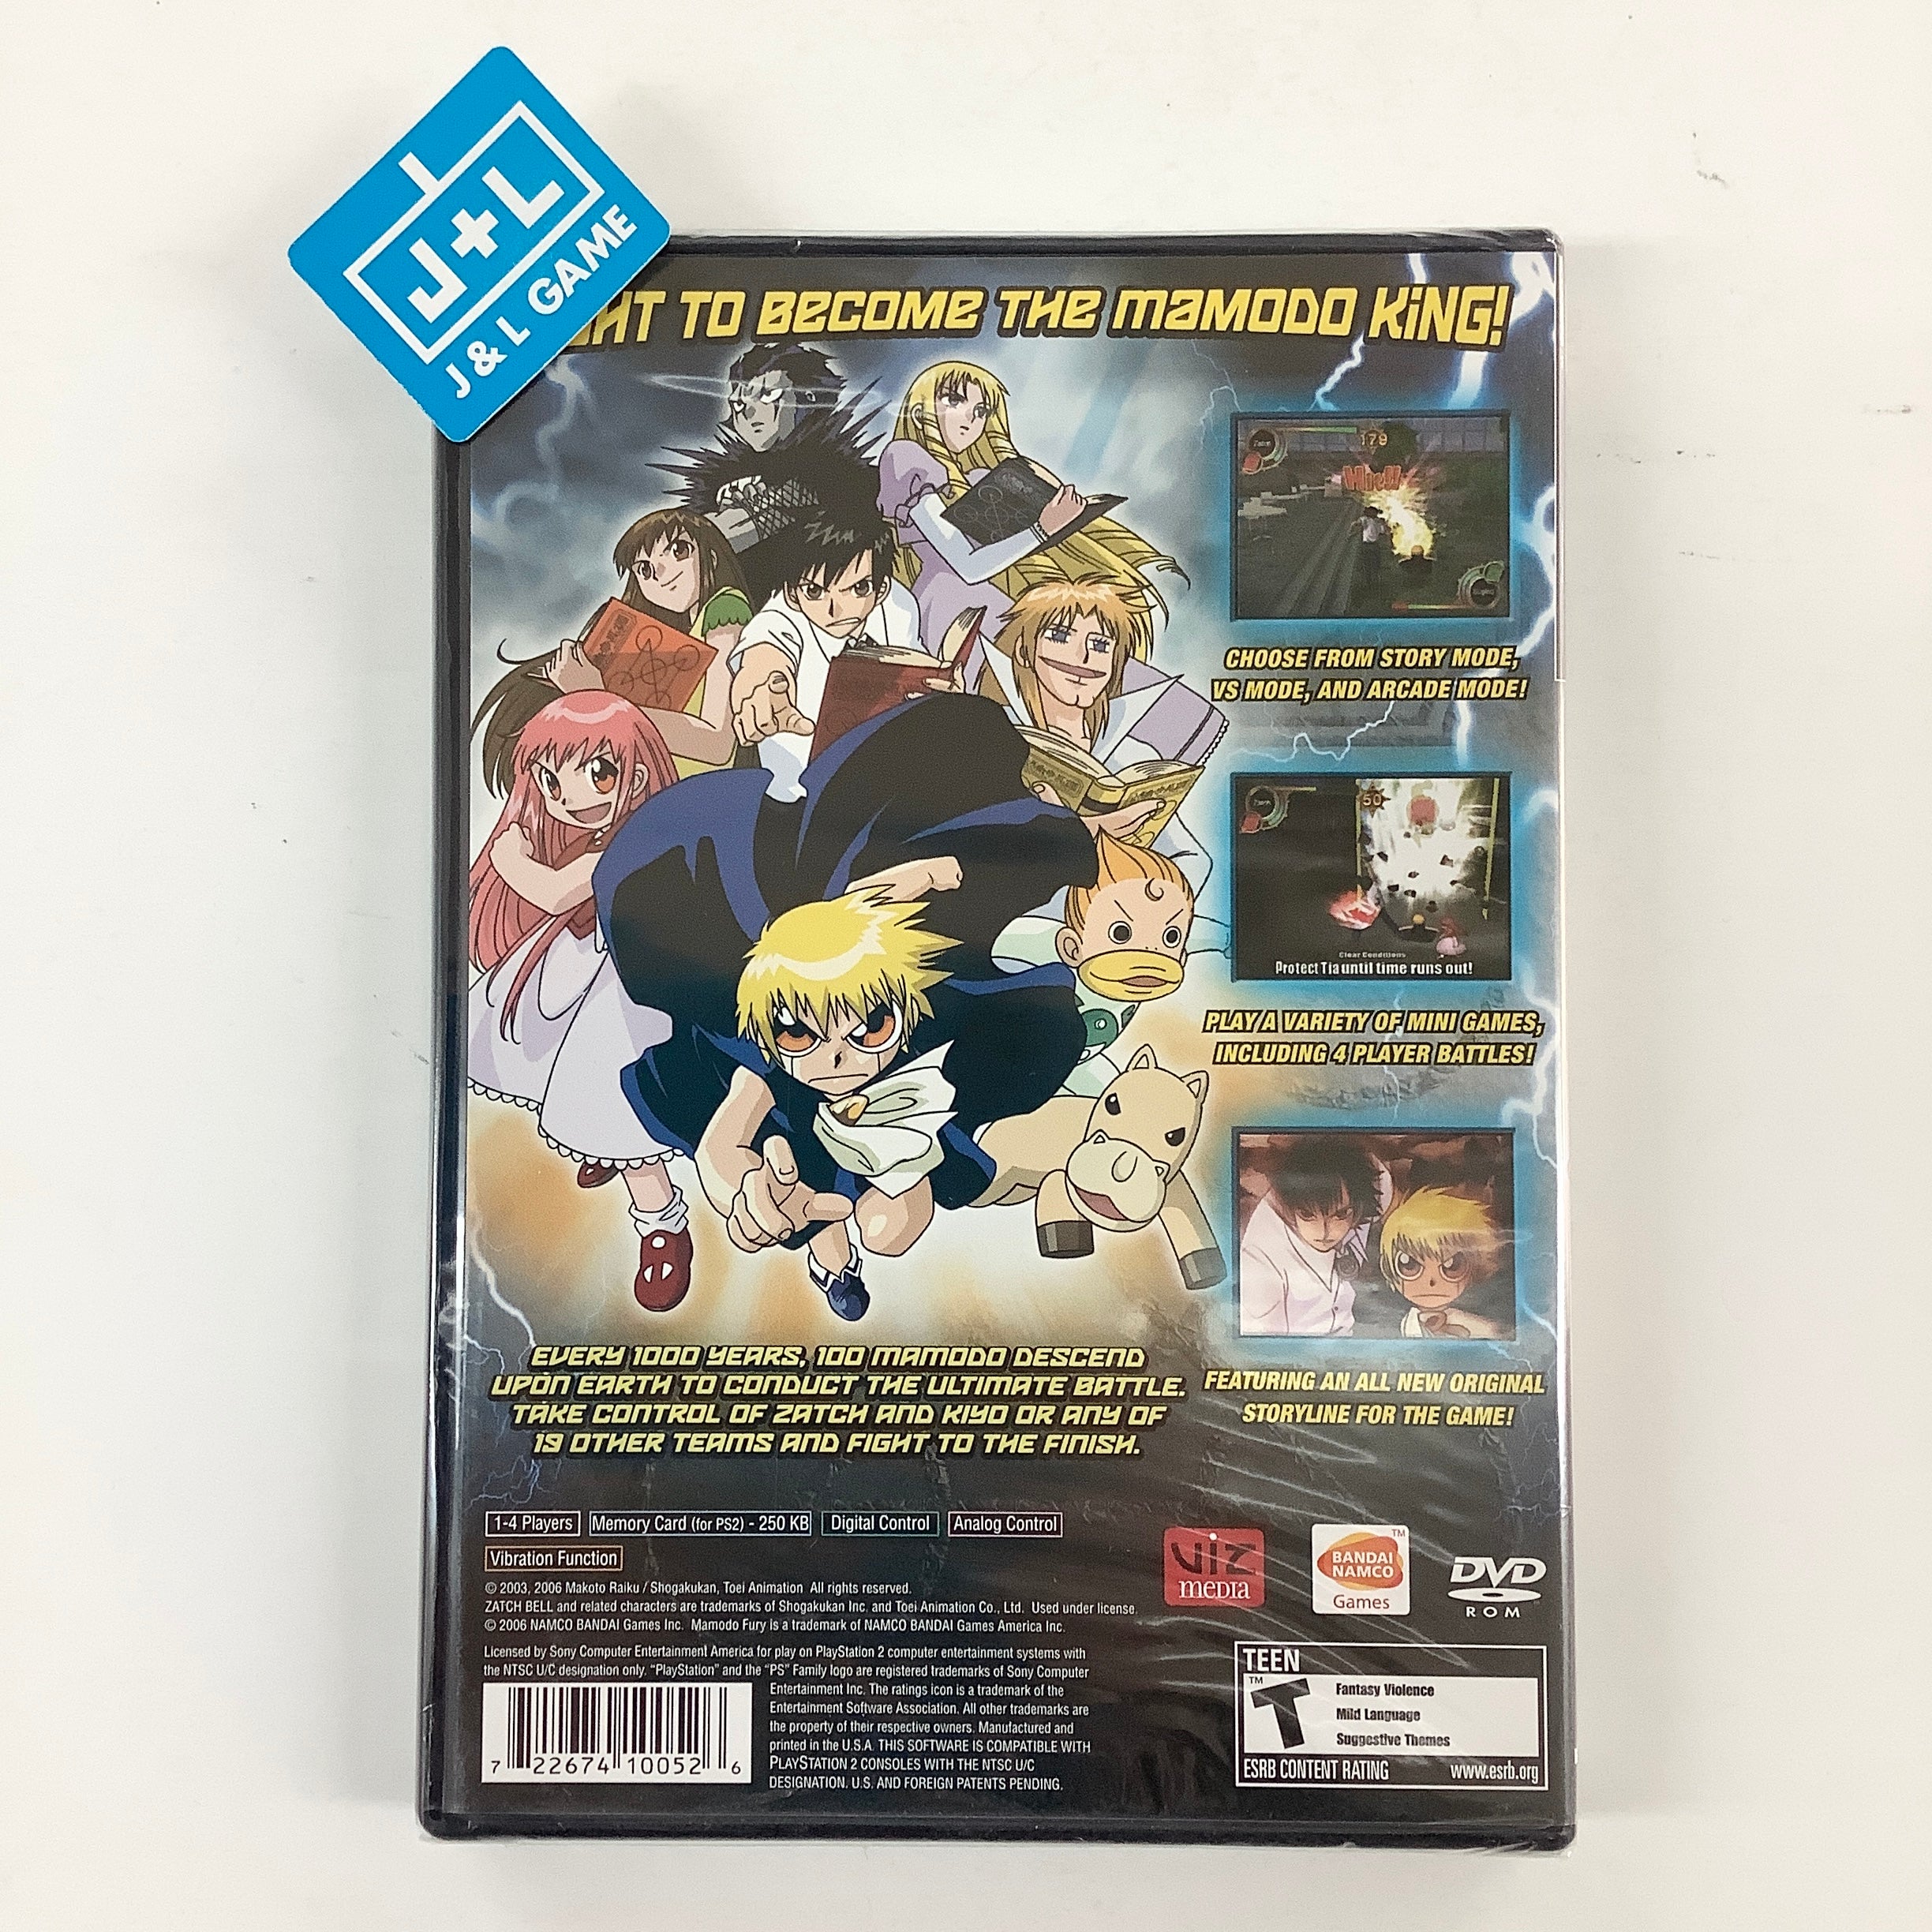 Zatchbell: Mamodo Fury - (PS2) PlayStation 2 Video Games BANDAI NAMCO Entertainment   